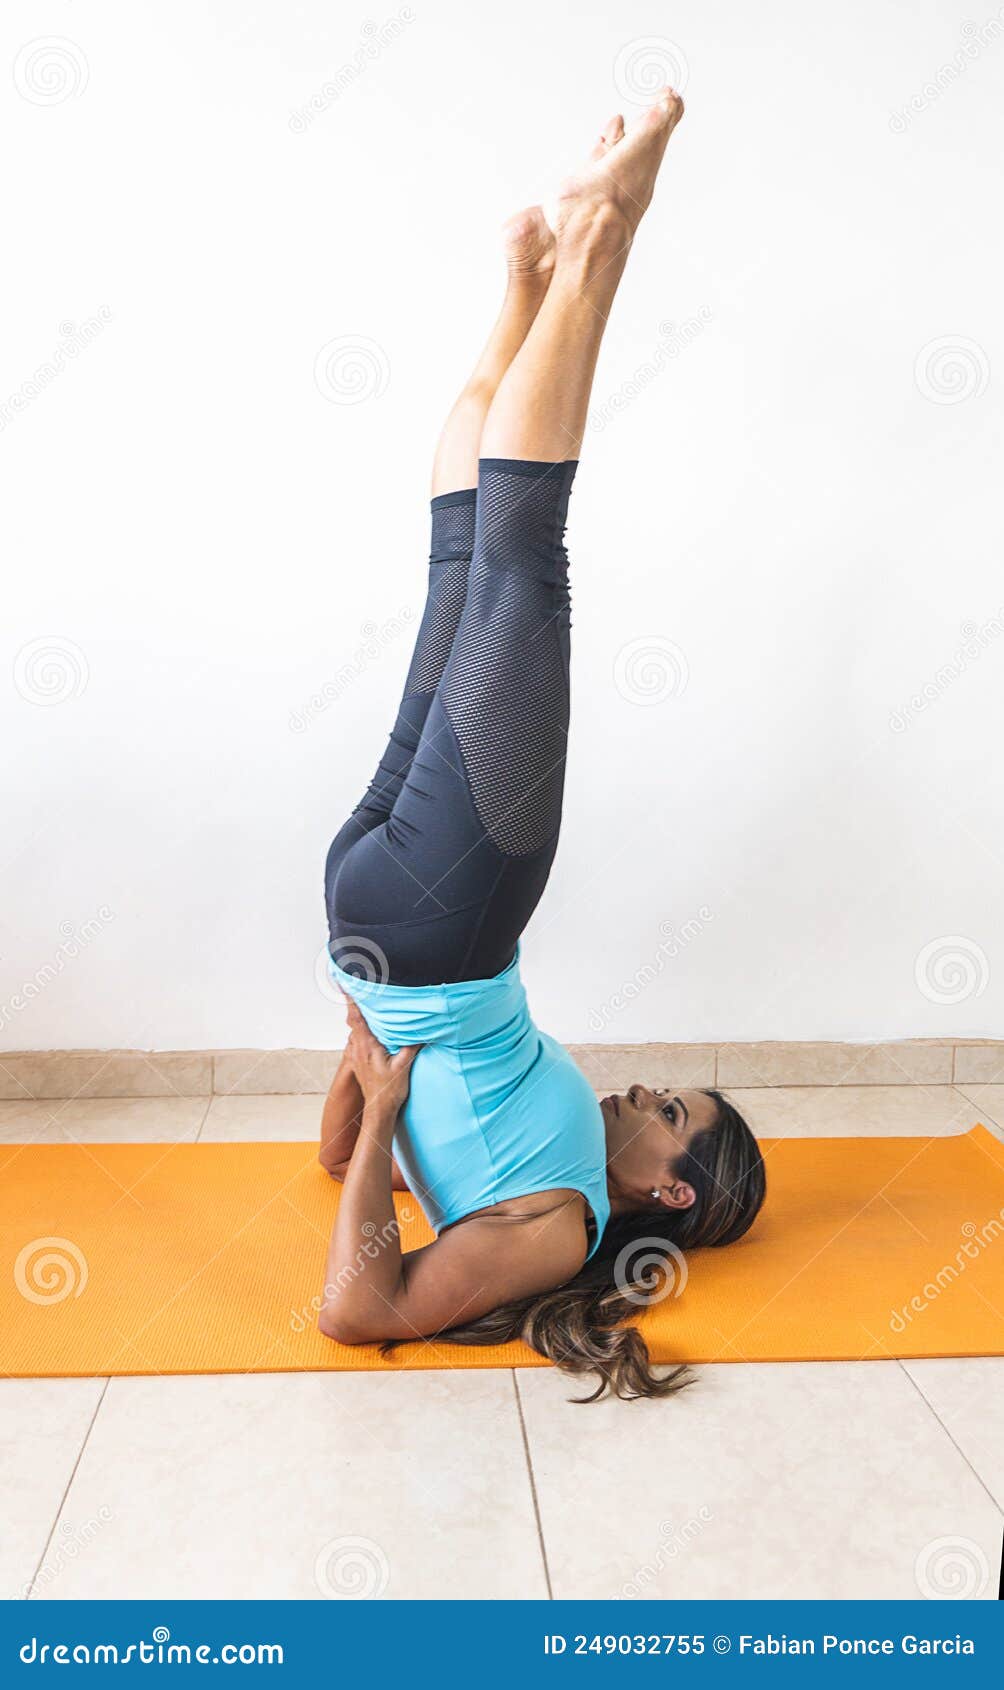 Candle pose | Yoga facts, Easy yoga workouts, Yoga benefits